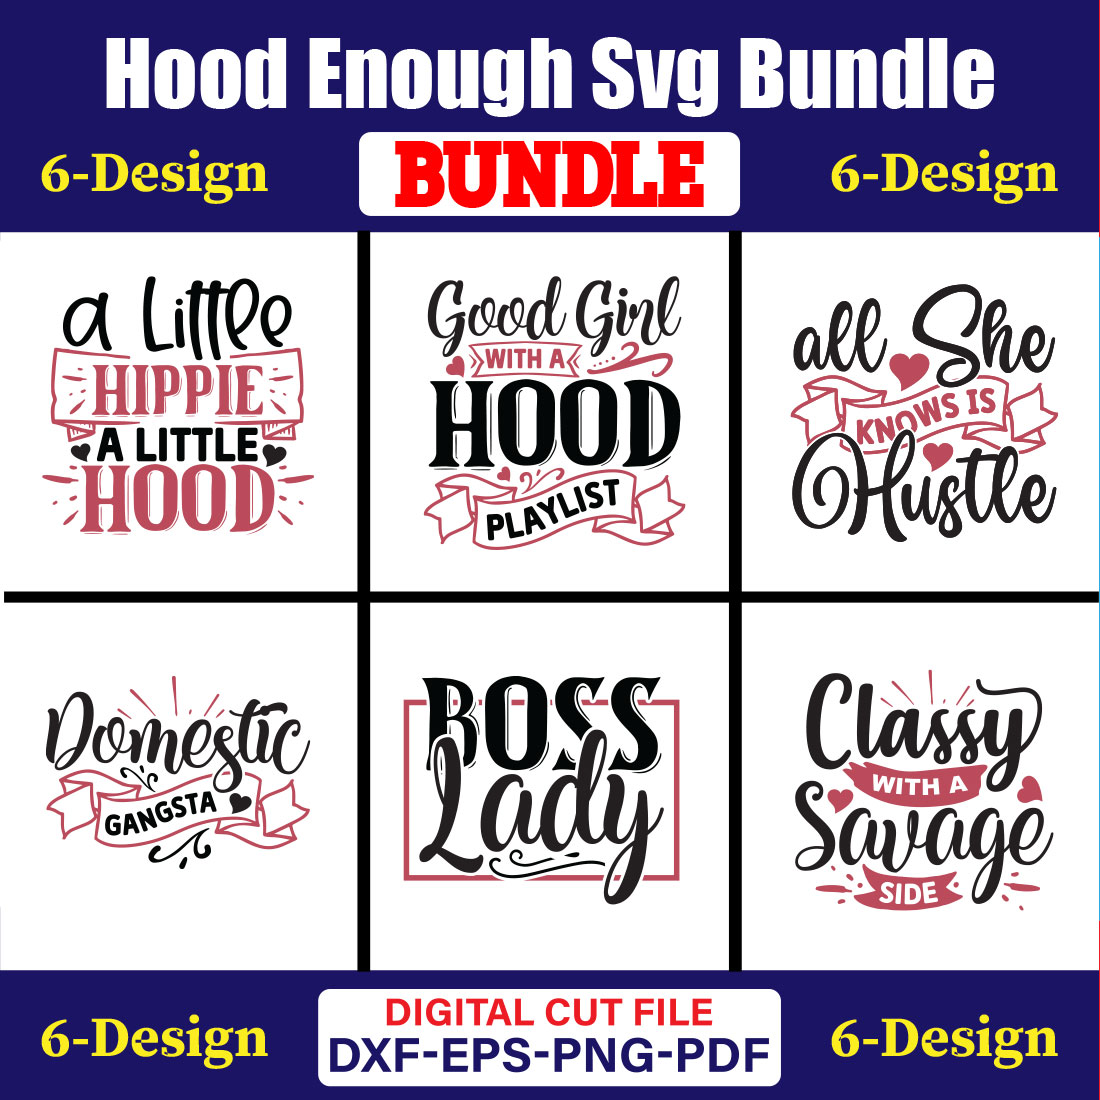 Hood Enough SVG T-shirt Design Bundle Vol-01 cover image.